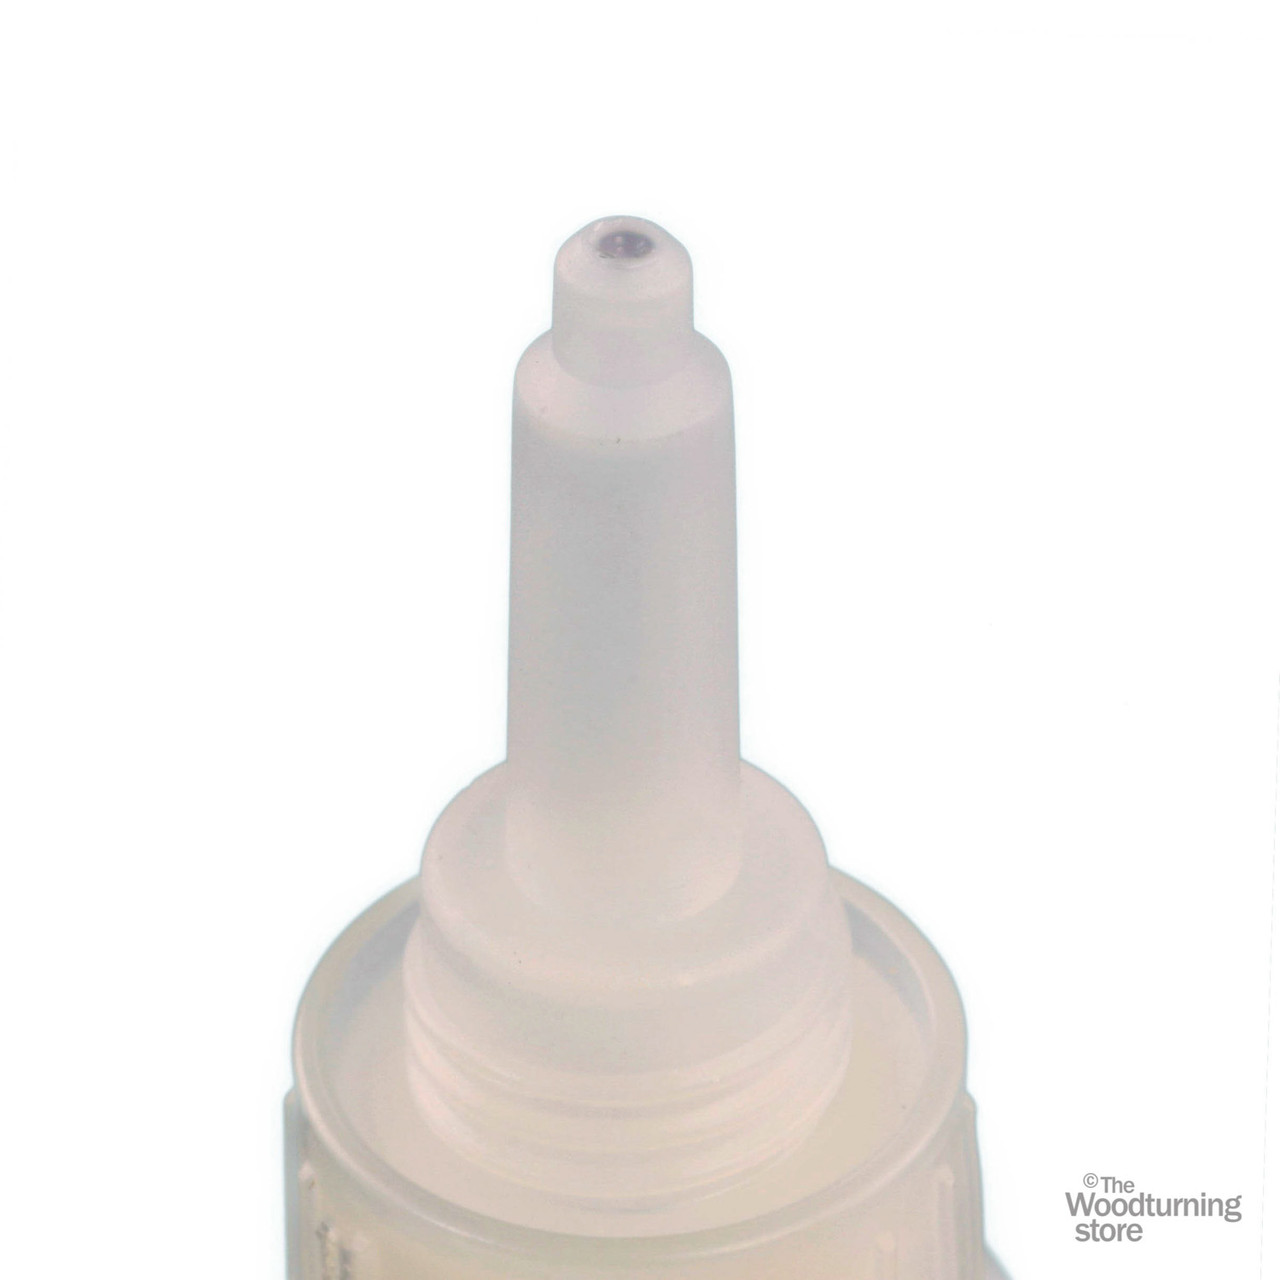 Parfix, 3460, Low Odor, Low Bloom CA Glue and Pen Turner's Finish, Medium, 2 Oz. Bottle